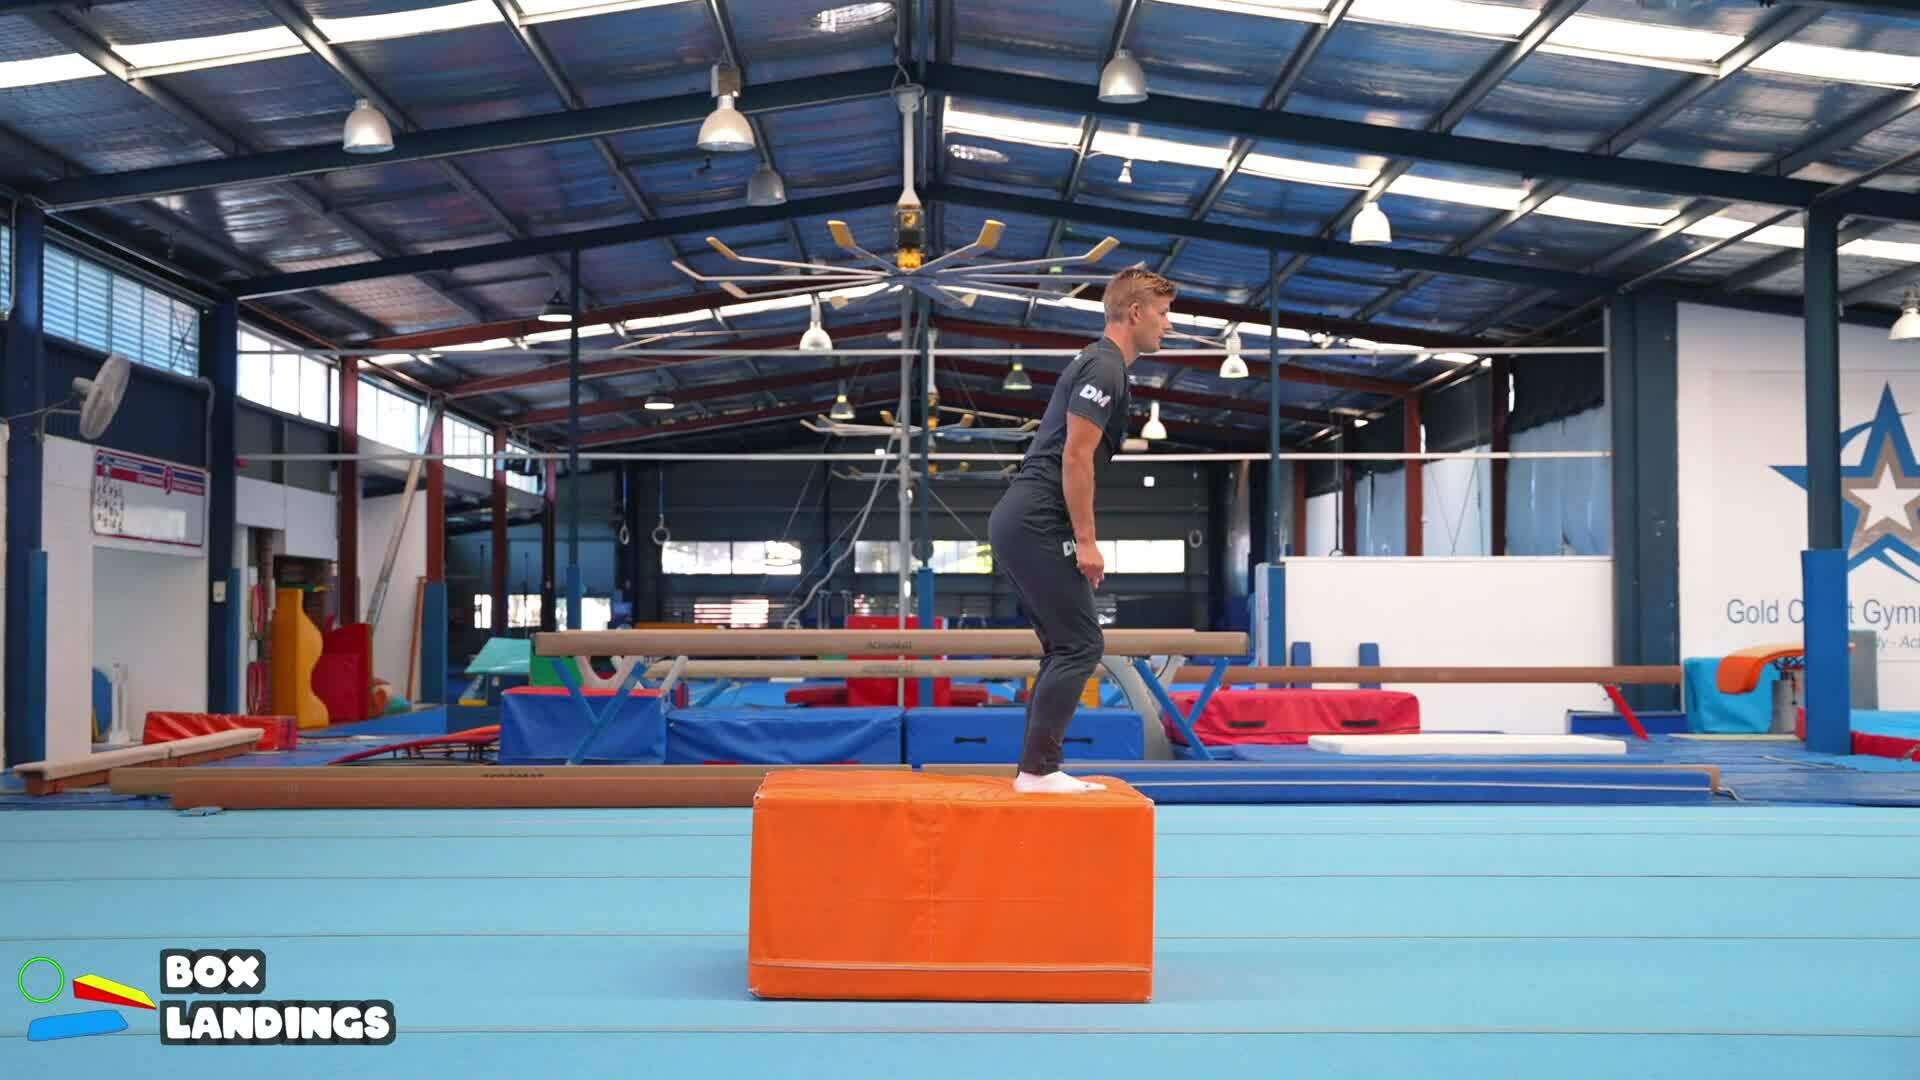 Elementary gymnastics - Misc - 9 box landings